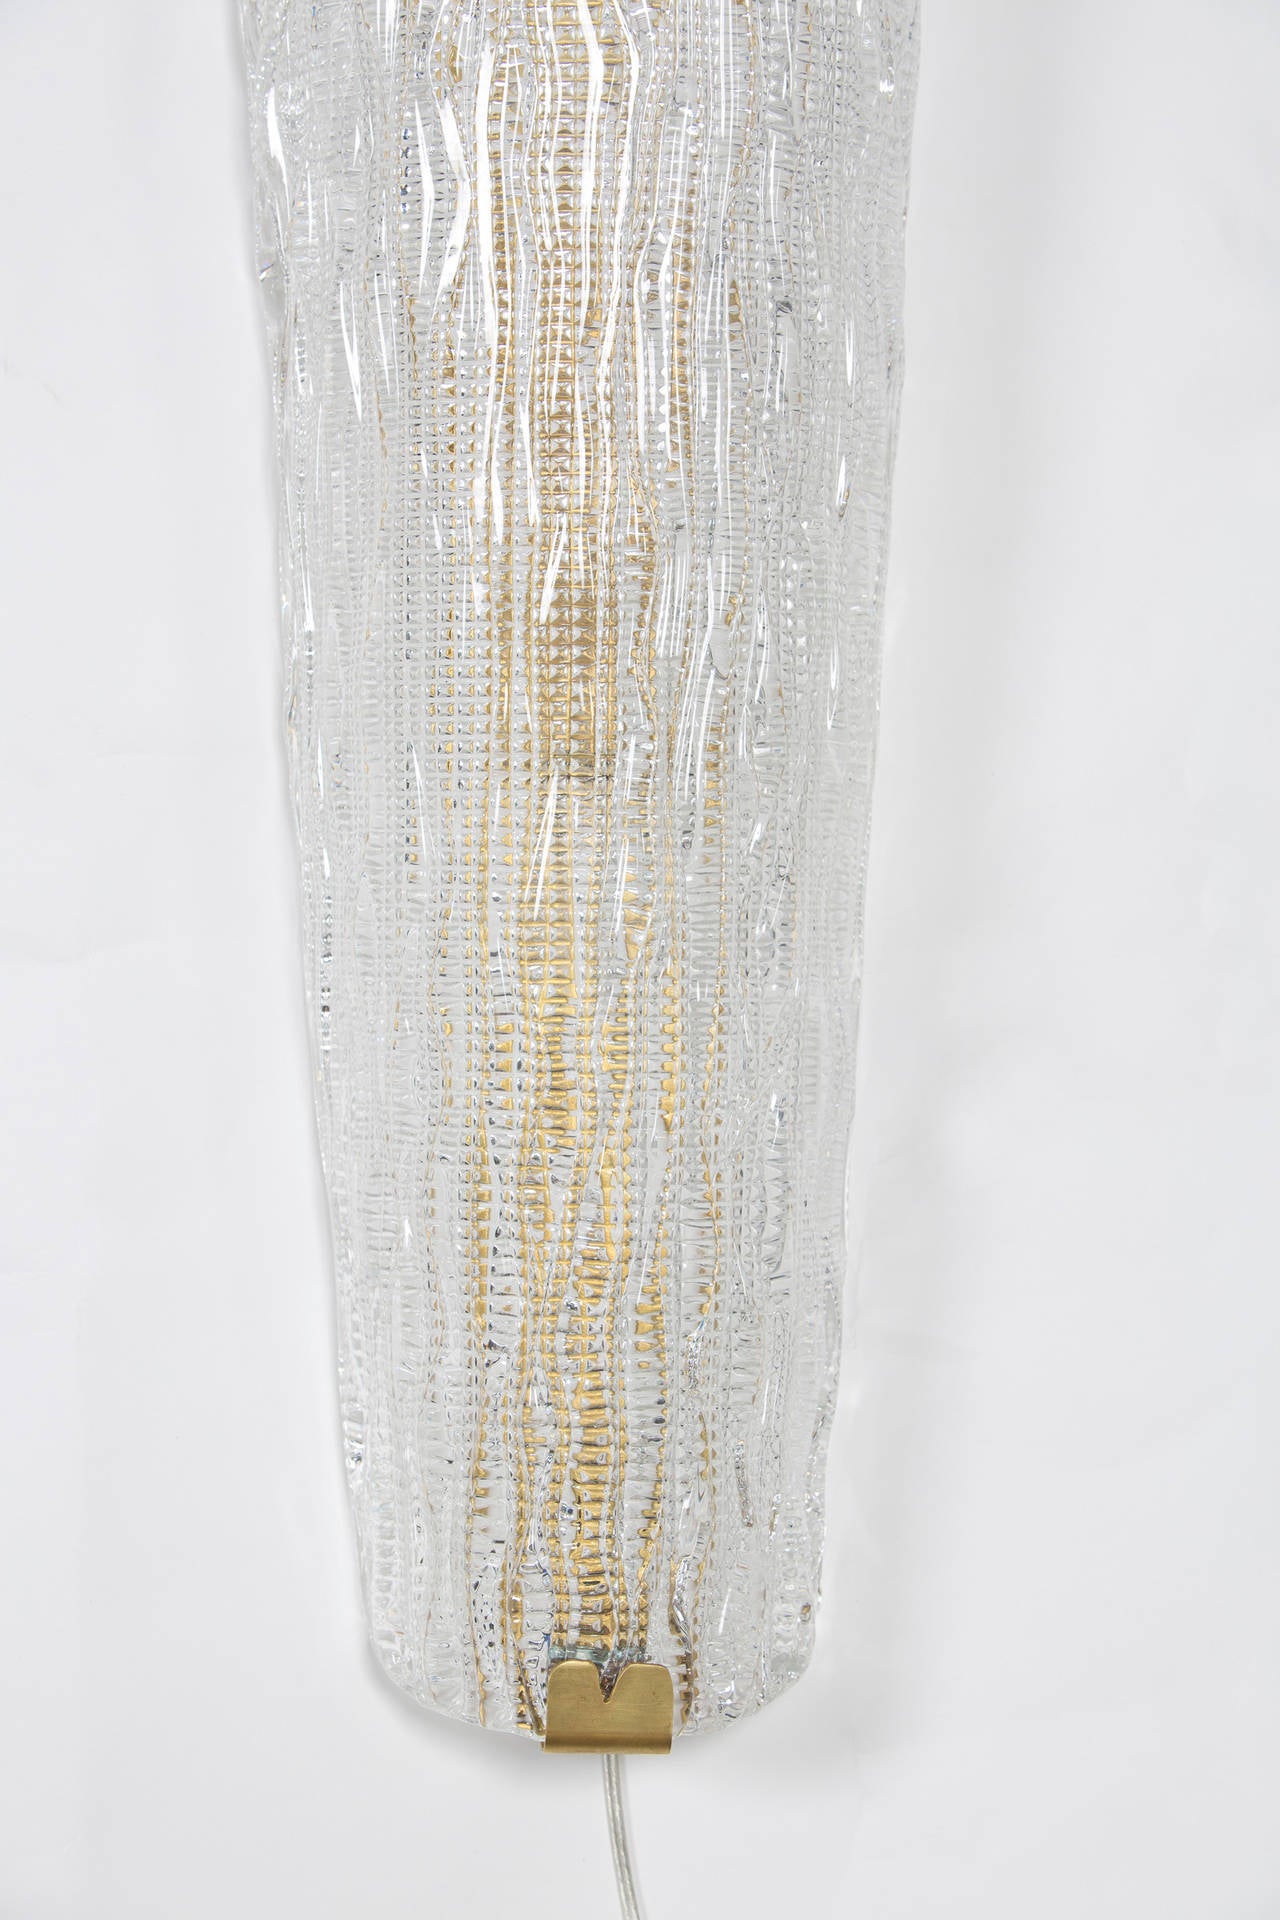 Brass Murano Glass Wall Sconces by Barovier